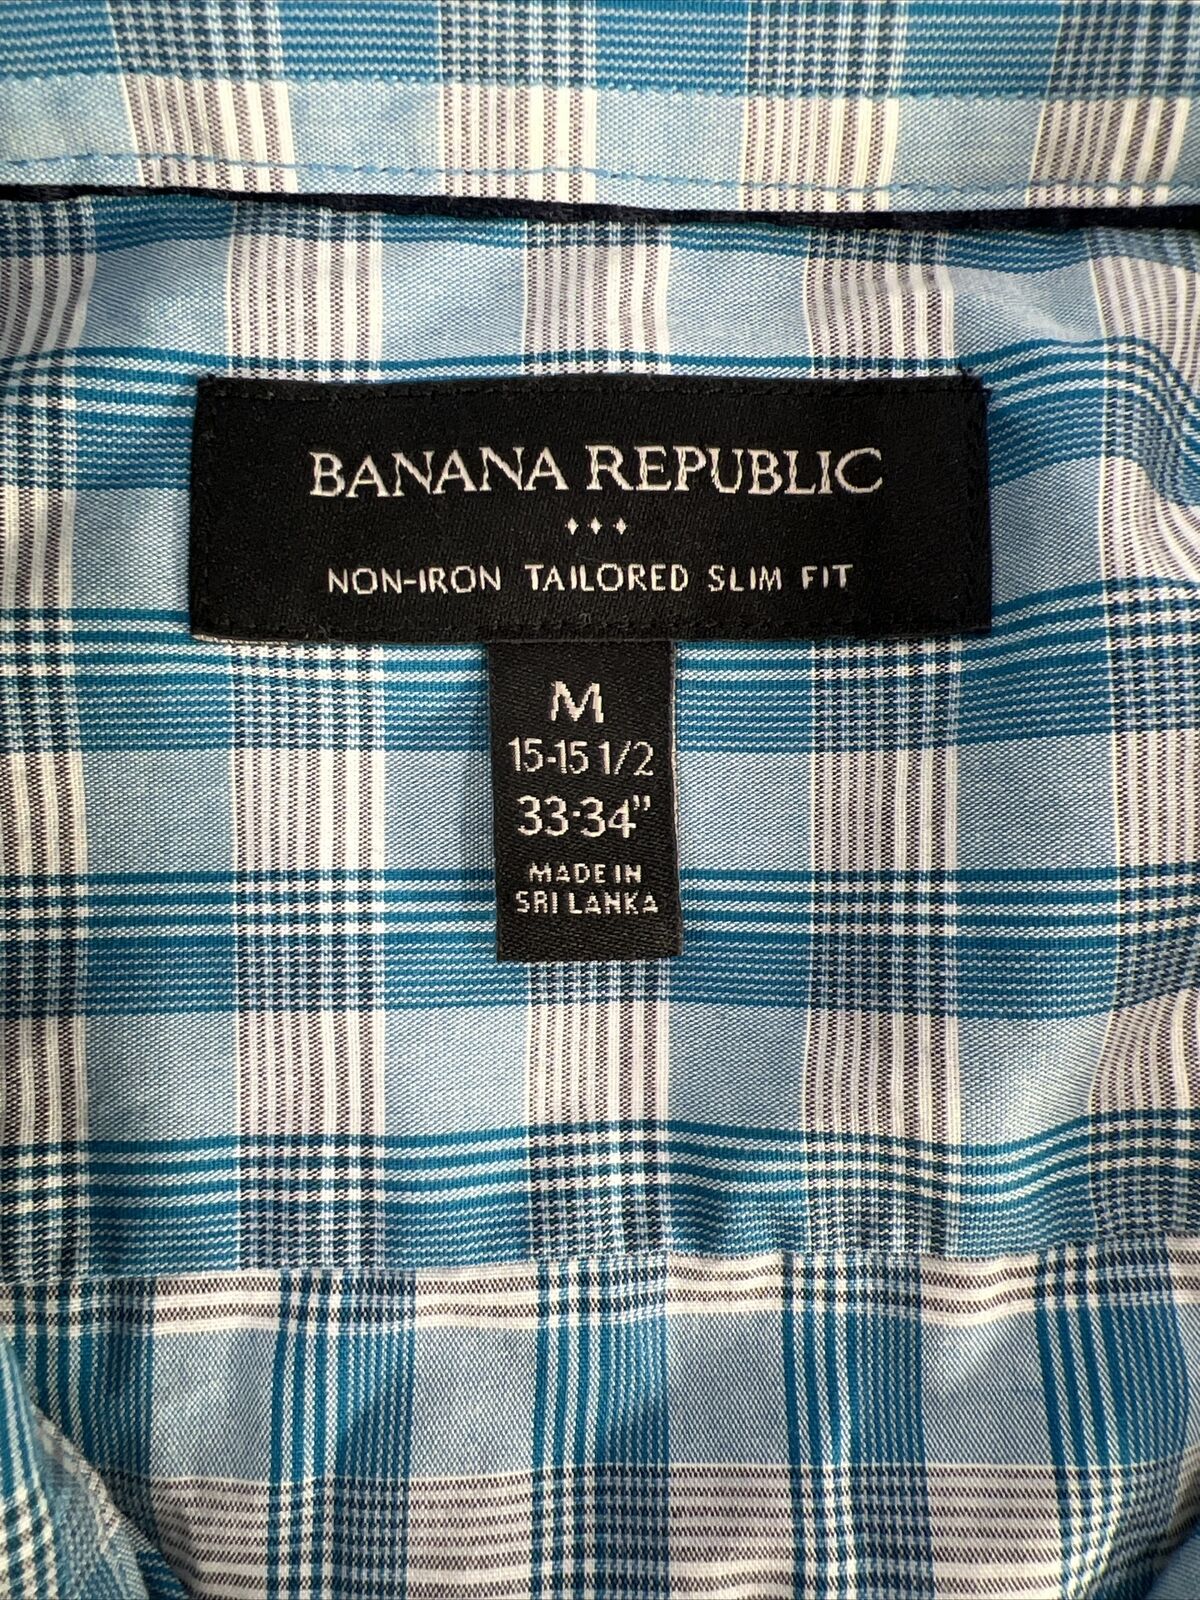 Banana Republic Men's Blue Plaid Non Iron Slim Fit Dress Shirt - M